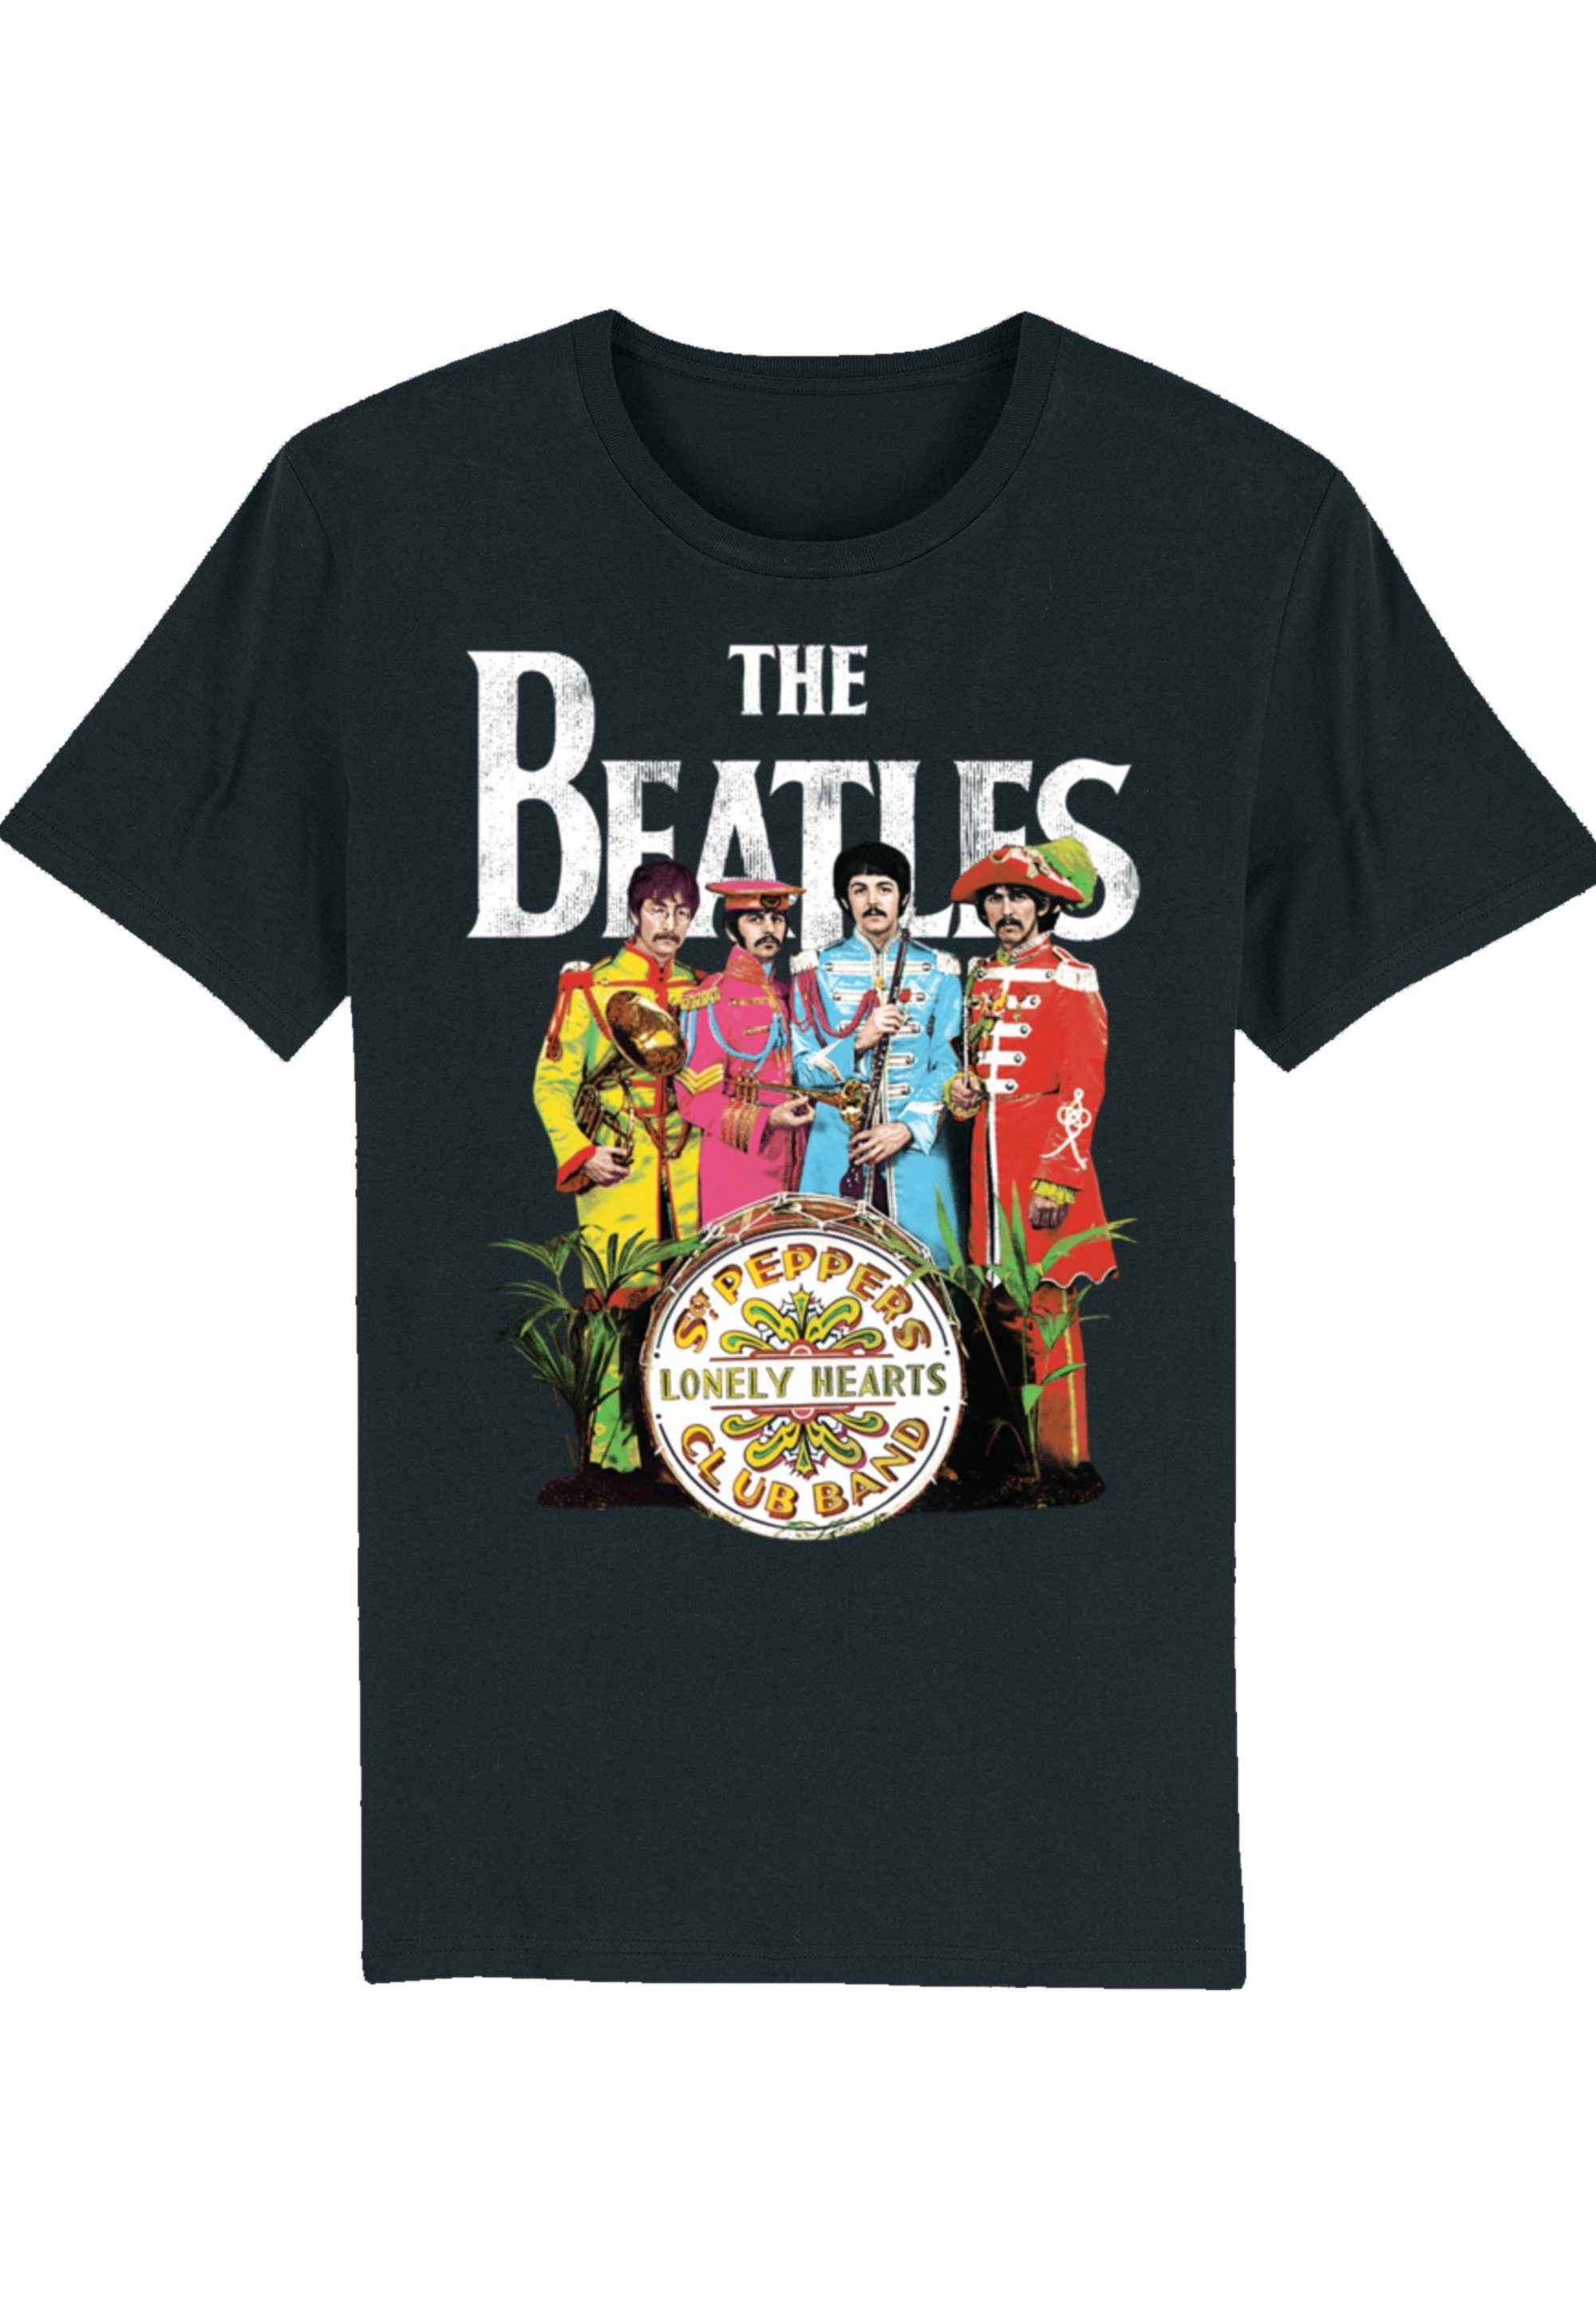 Pepper und T-Shirt vielseitig Komfortabel F4NT4STIC kombinierbar The Print, Sgt Beatles